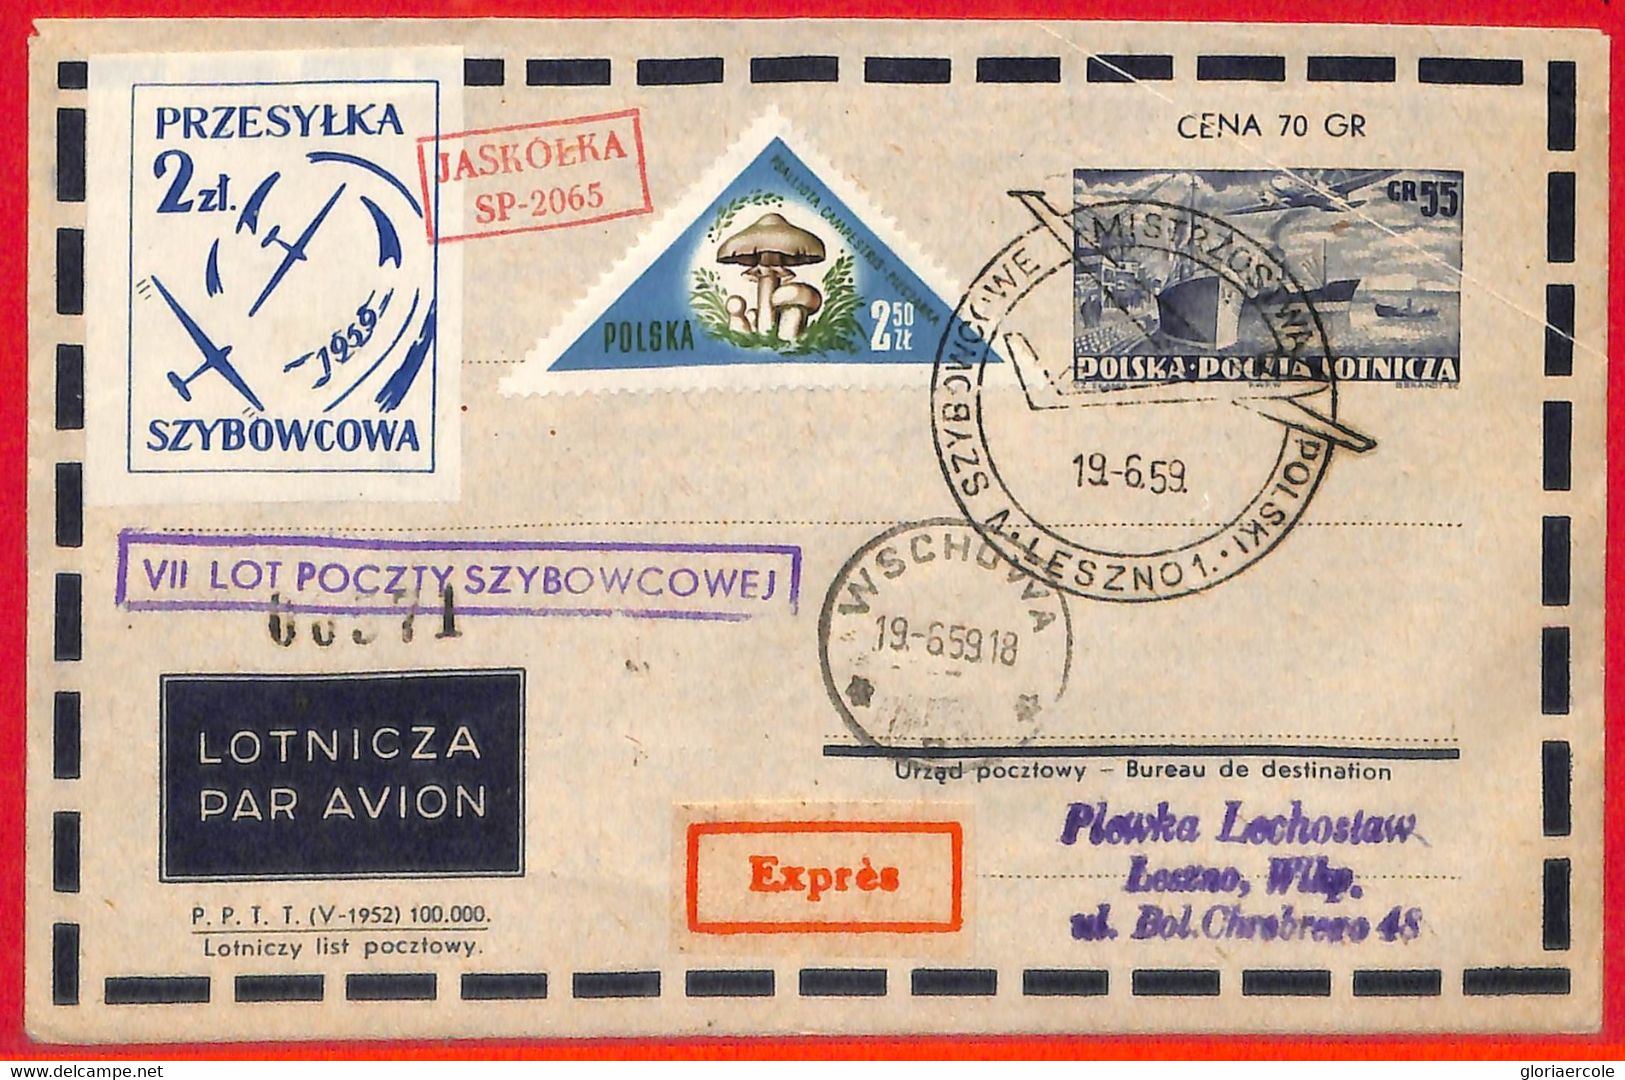 Aa3413 - POLONIA - Postal History - GLIDER FLIGHT Cover 1959 - Aviones